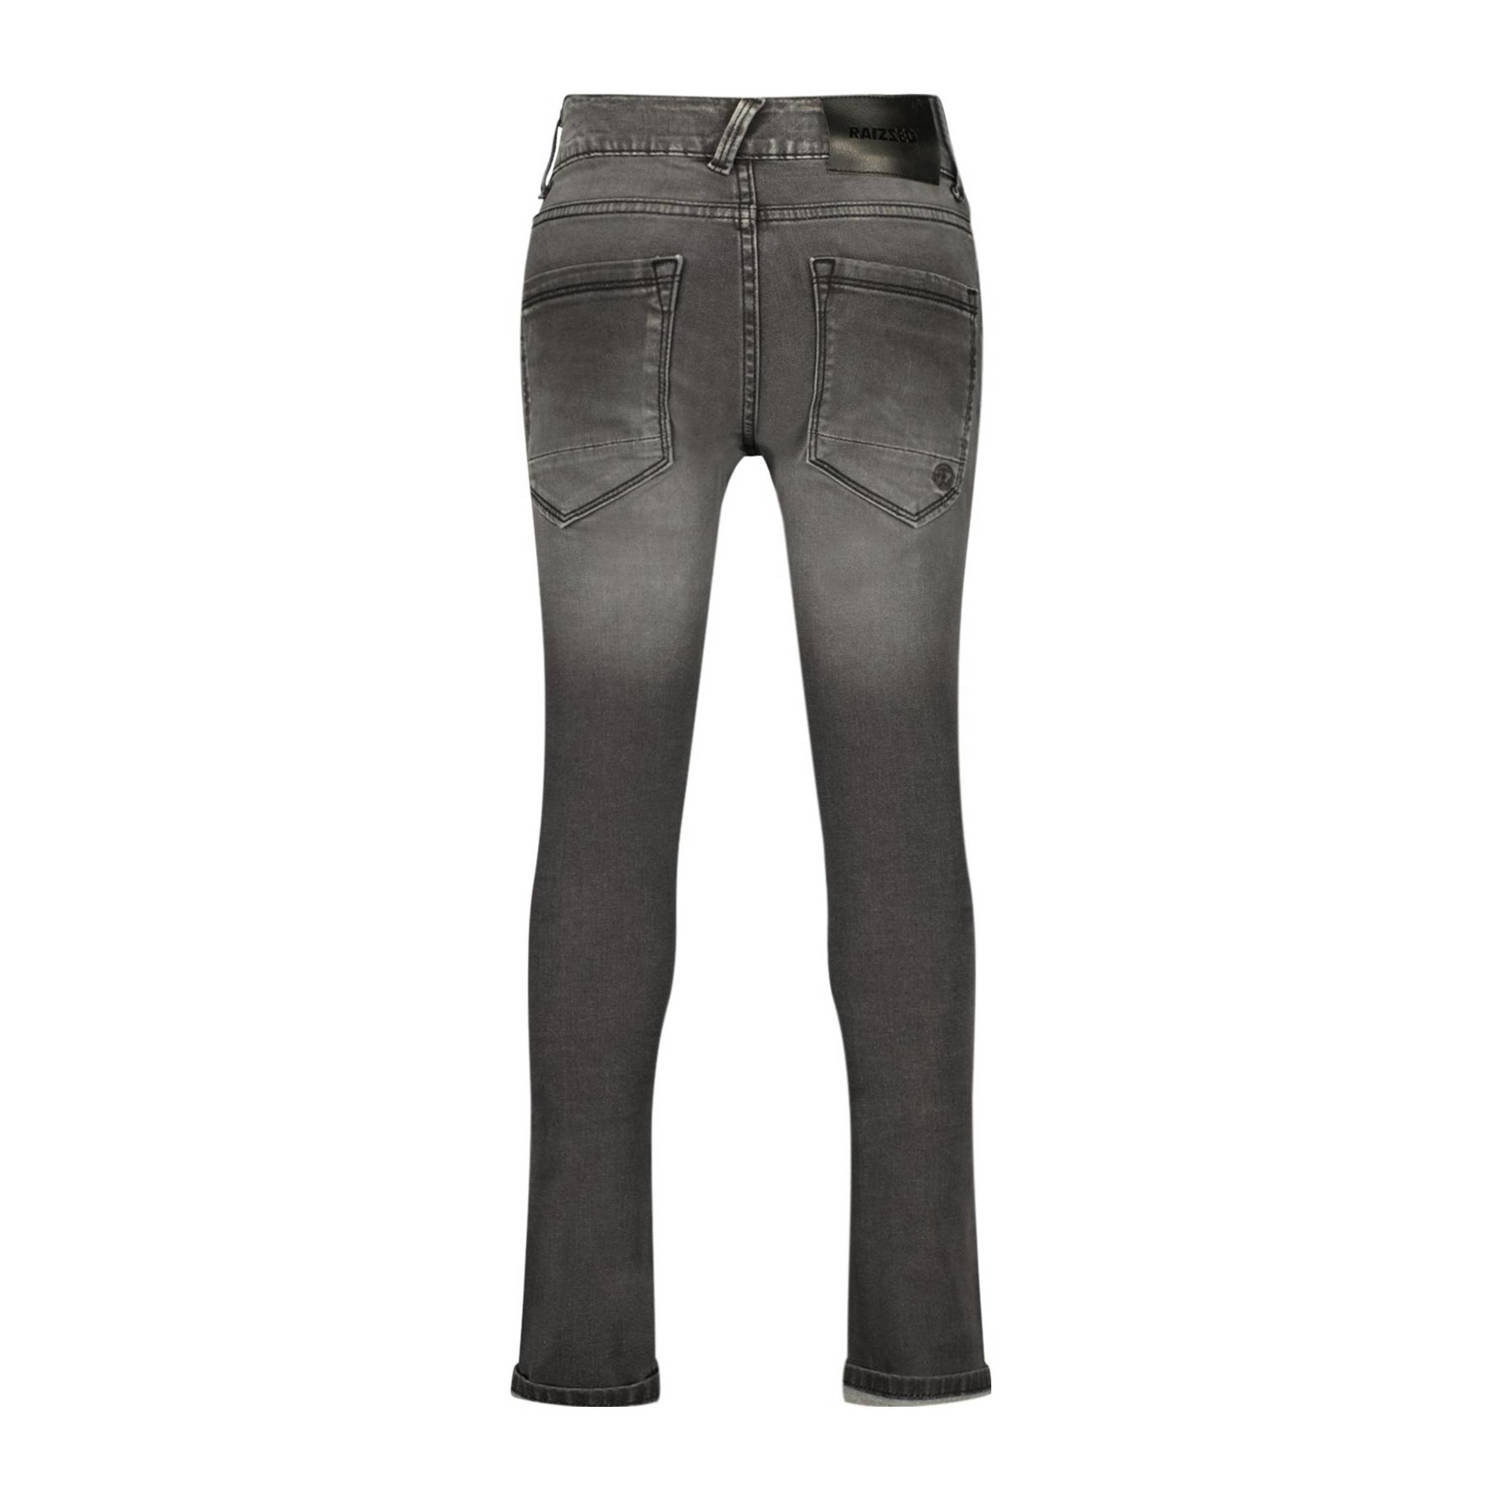 Raizzed skinny jeans Tokyo vintage grey